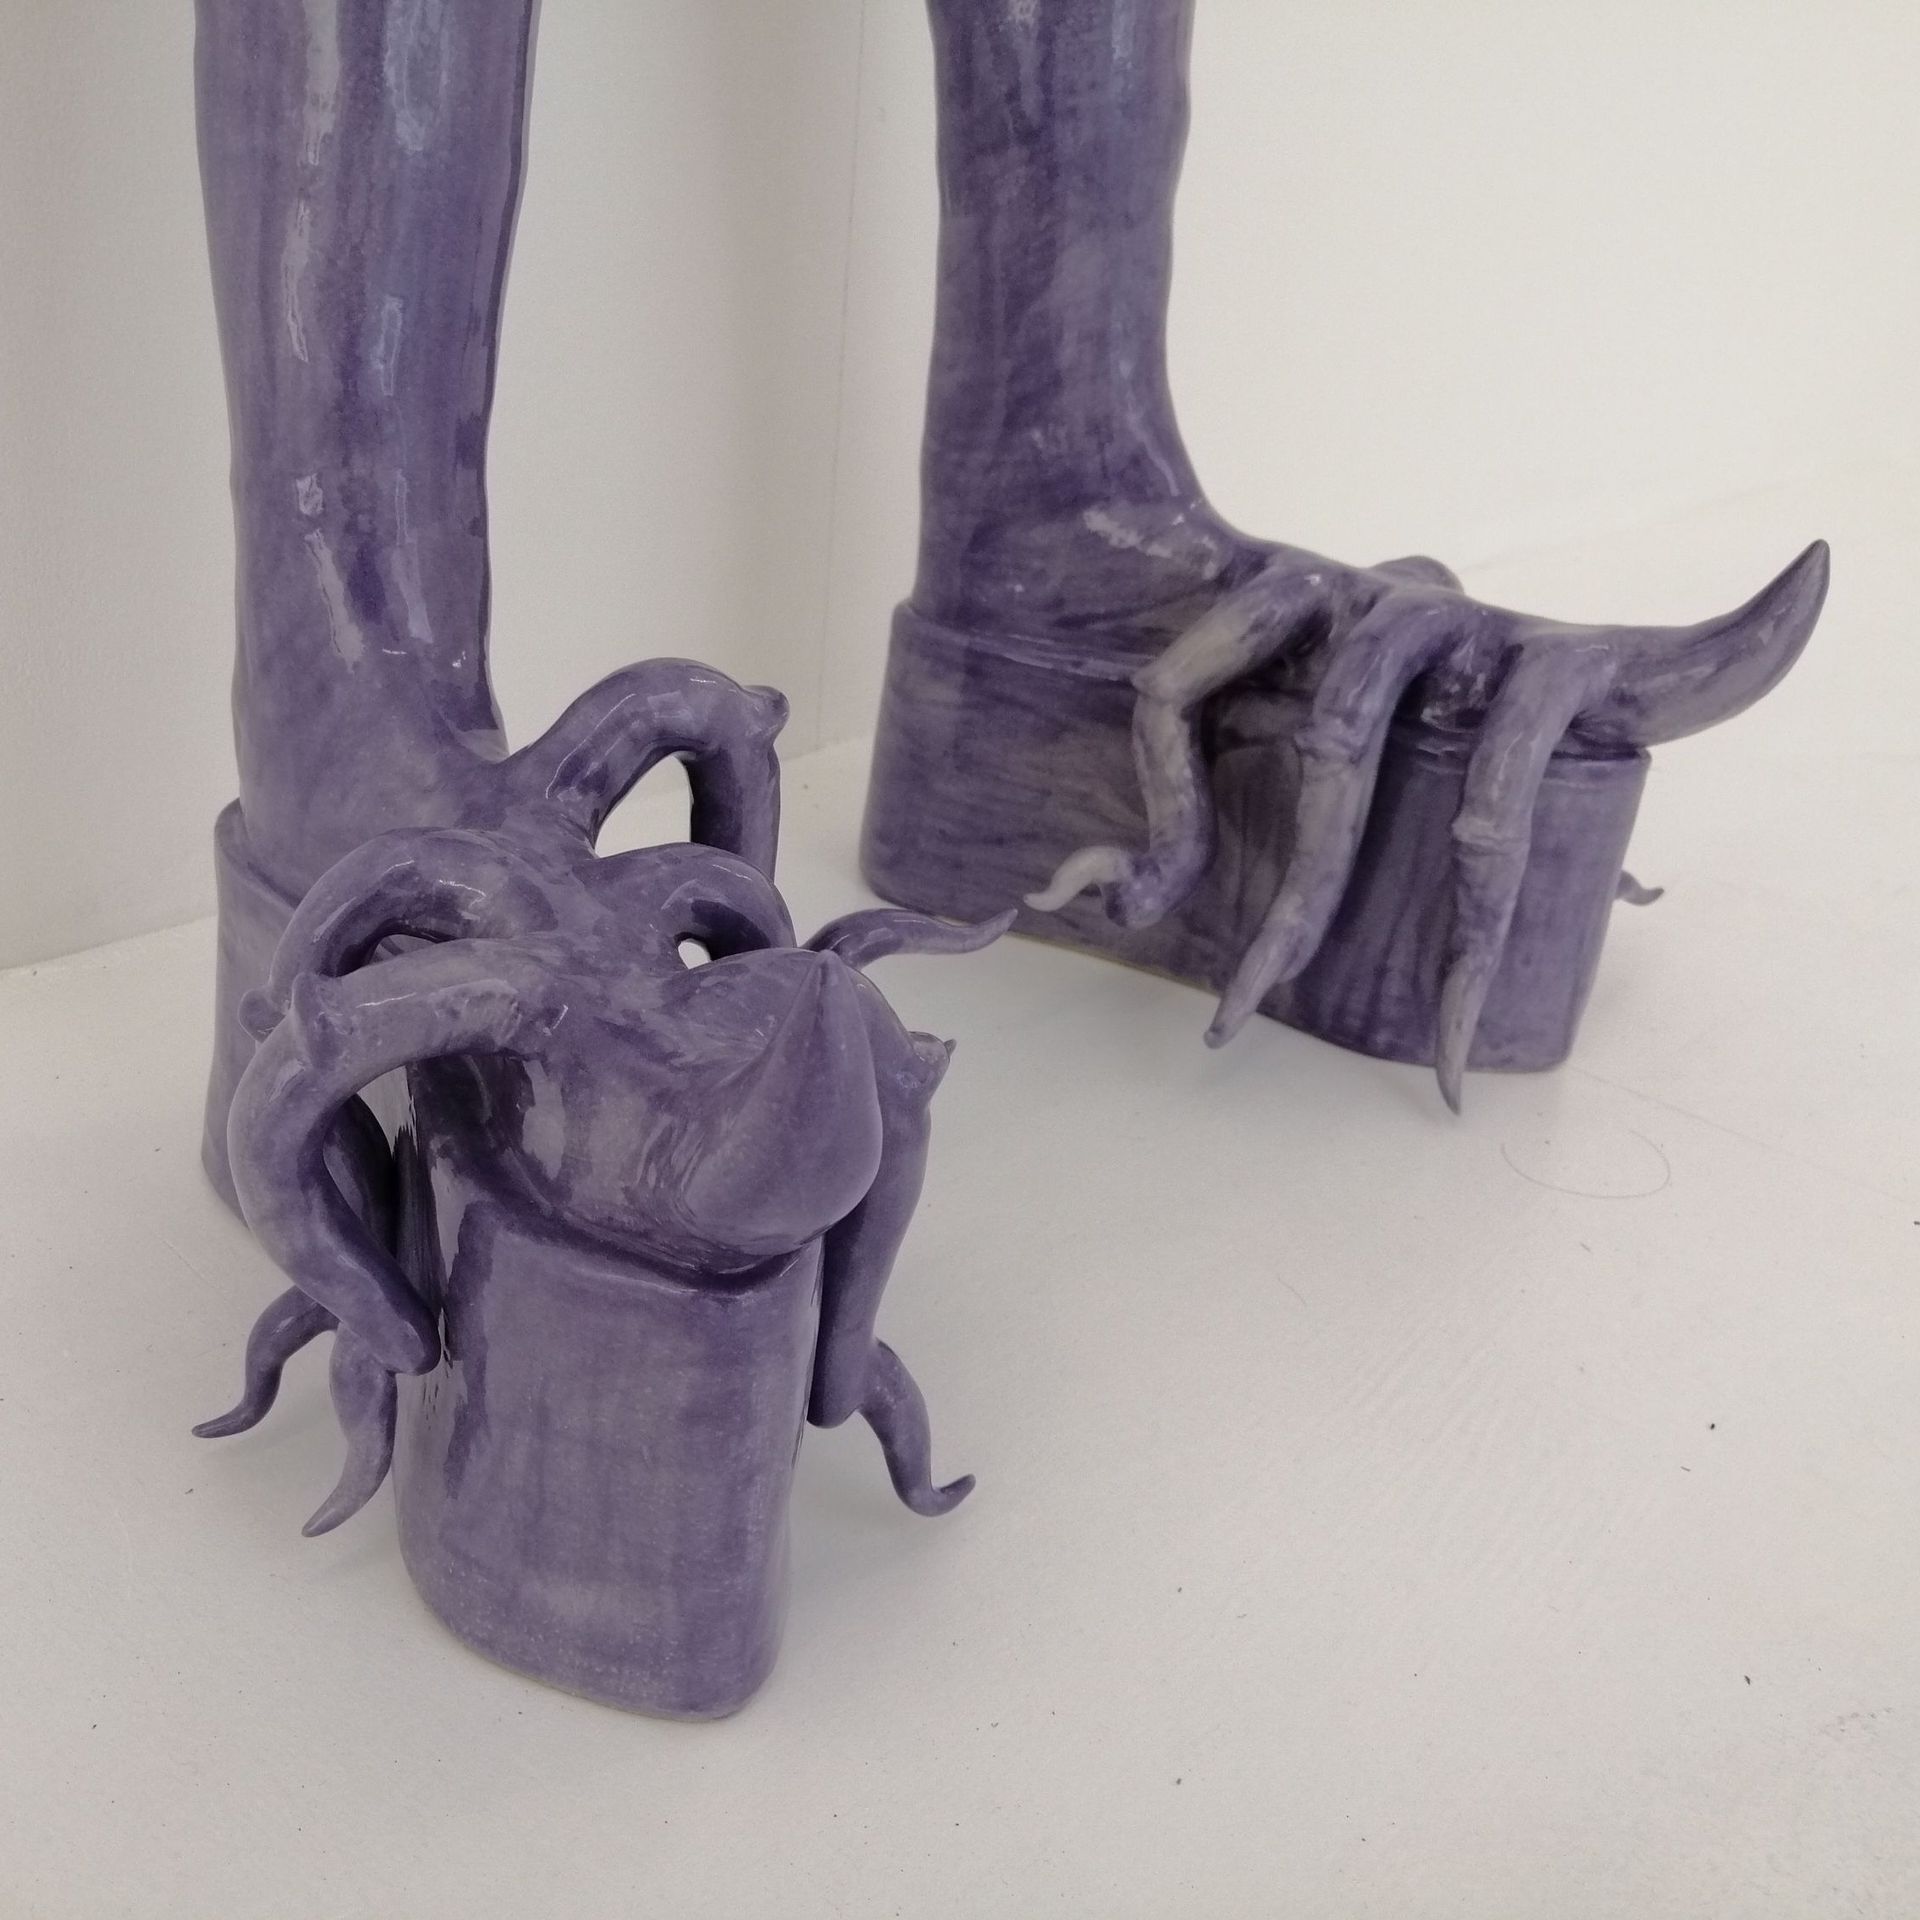 Naomi Gilon, "Spring assortment: Lilac Bag/Platform thigh-high boots", 2021 